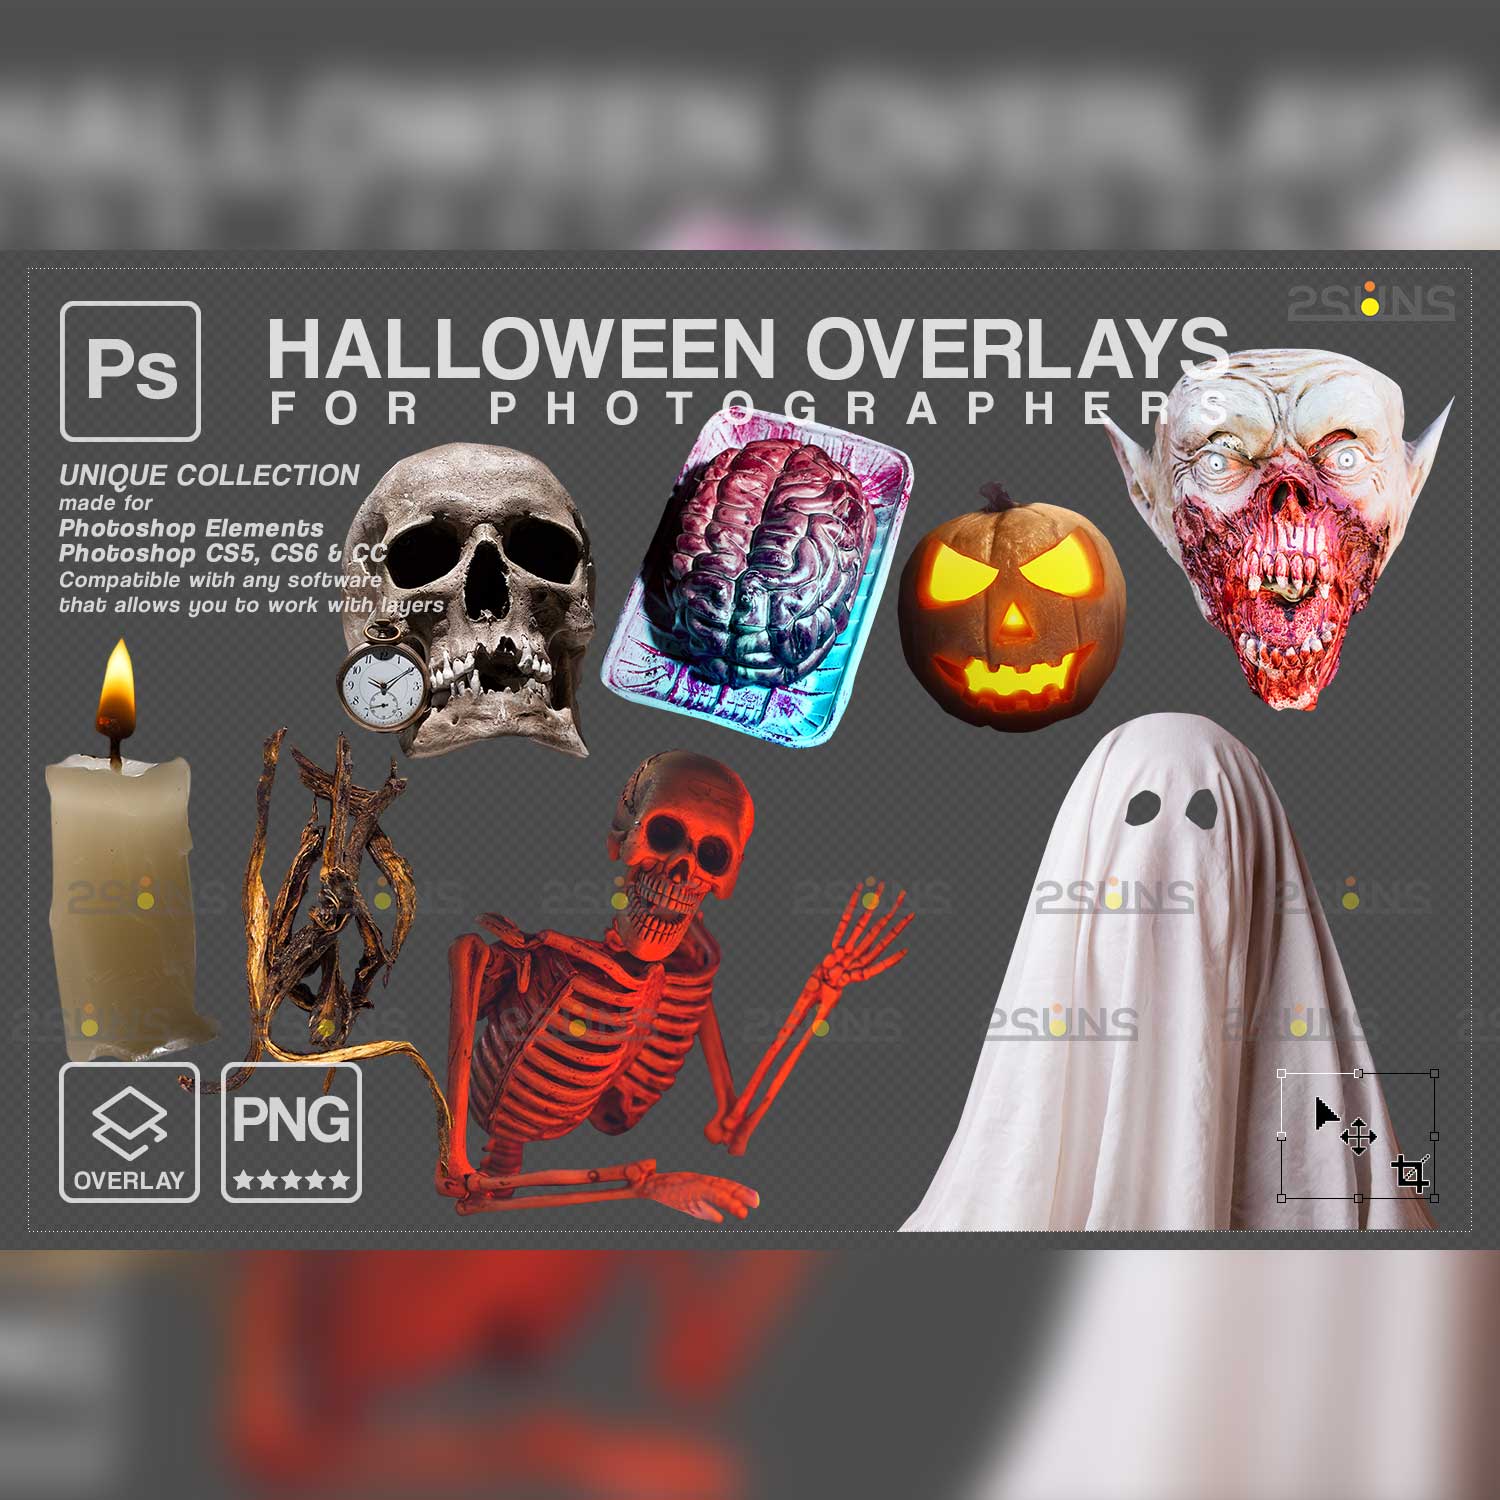 Halloween Digital Backdrop Overlays cover image.